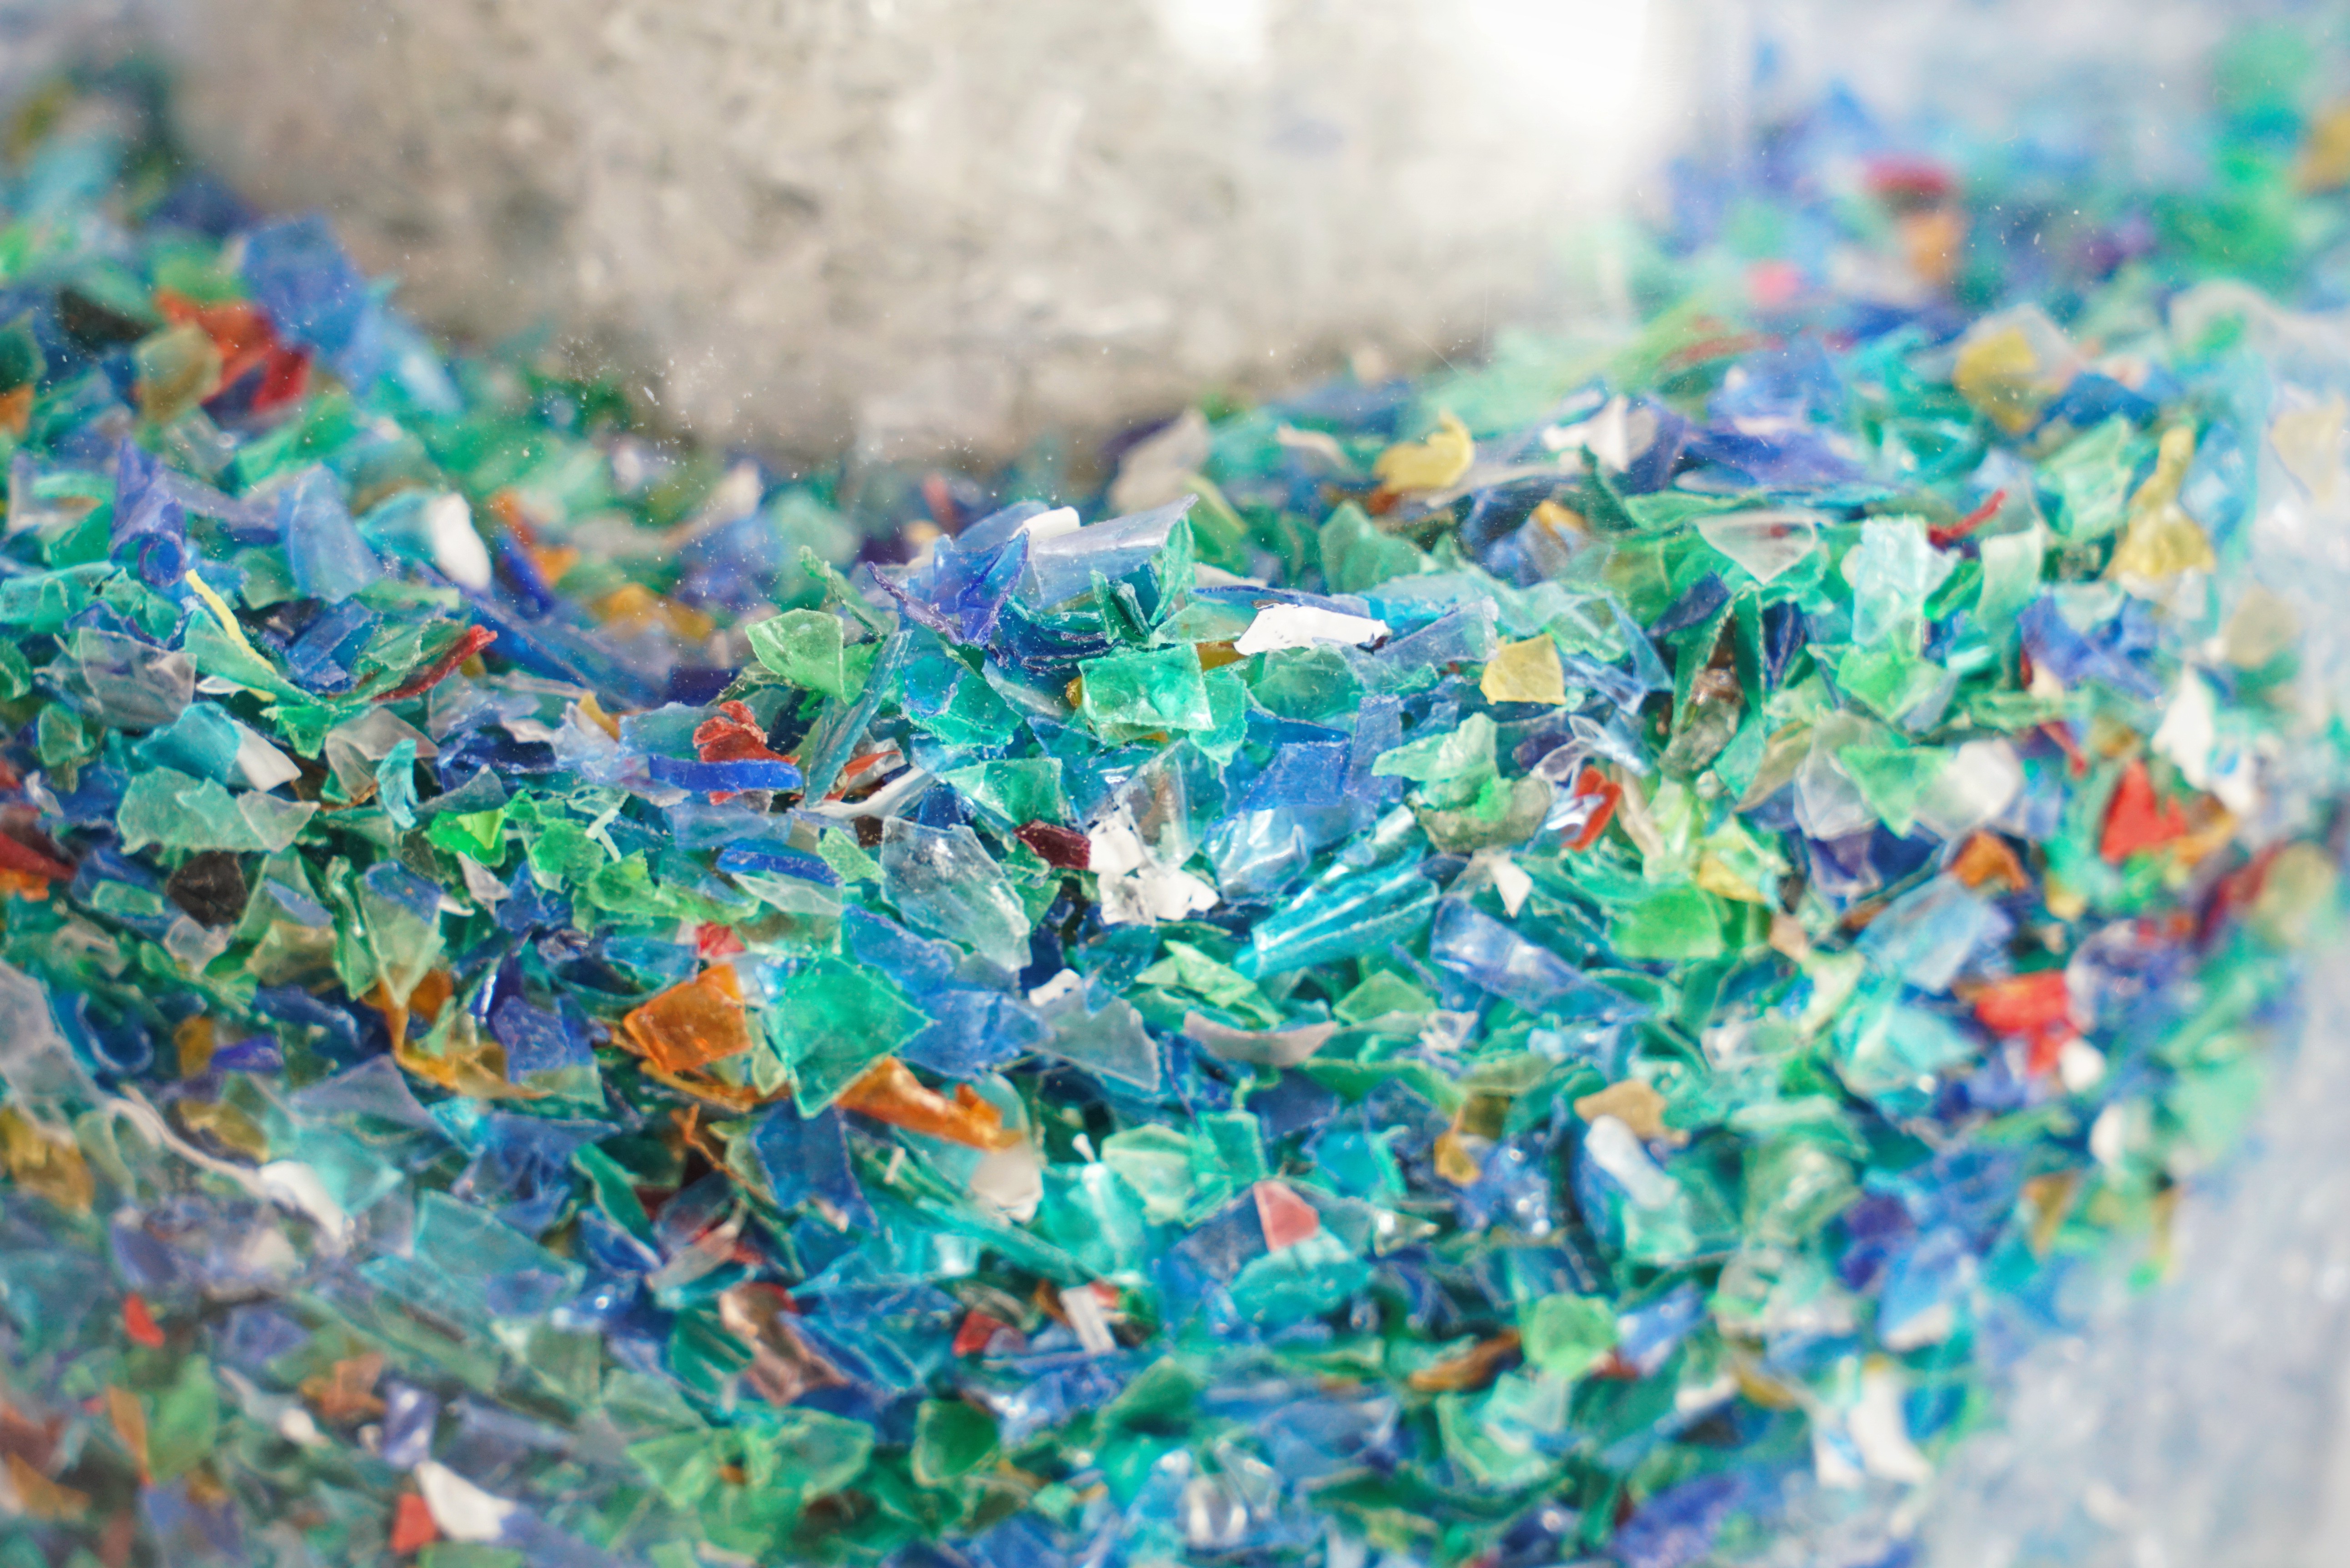 Plastic waste has risen dramatically alongside globalisation. Photo: Shutterstock